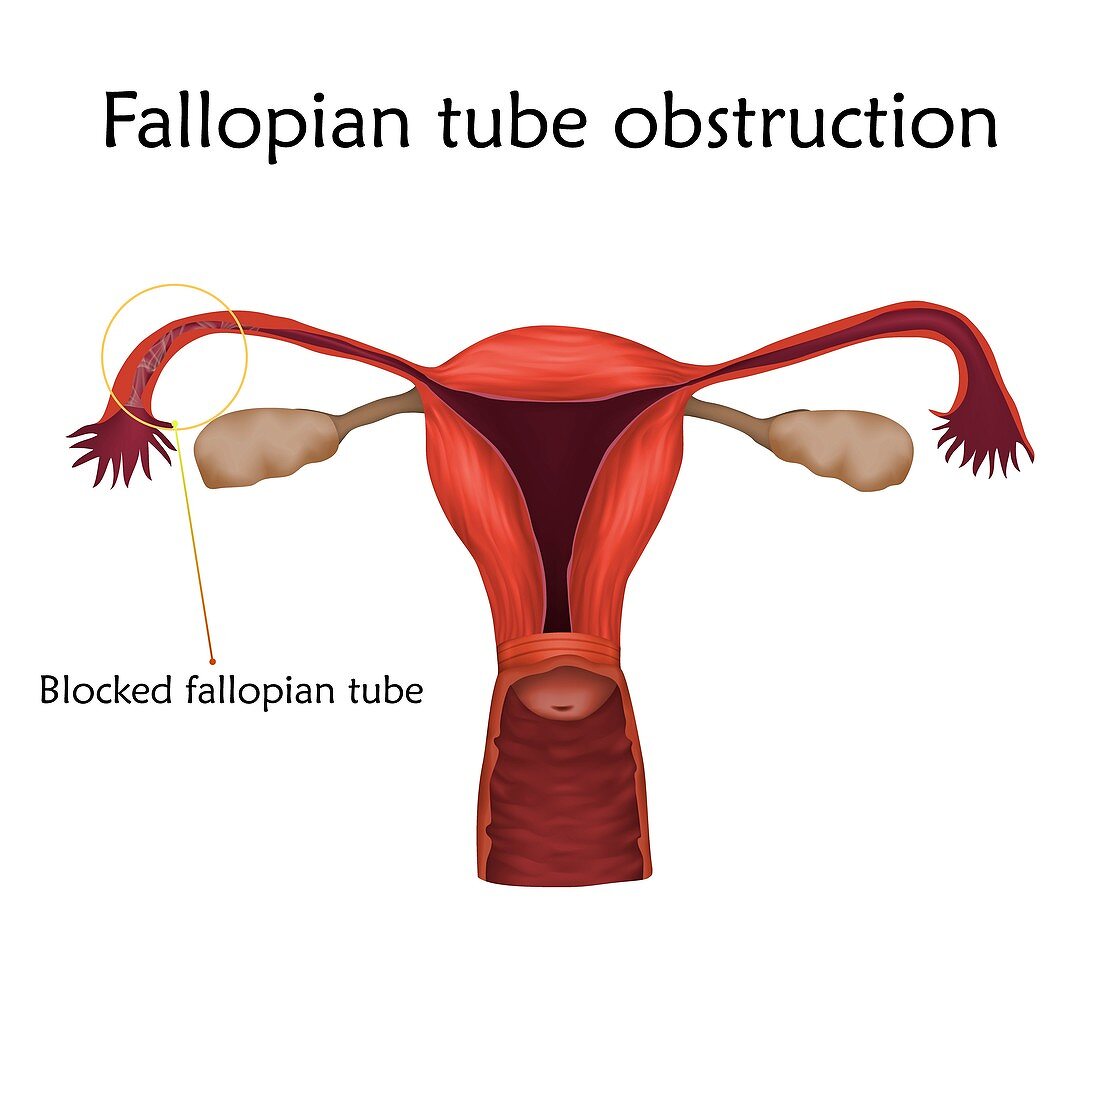 Fallopian tube obstruction, illustration